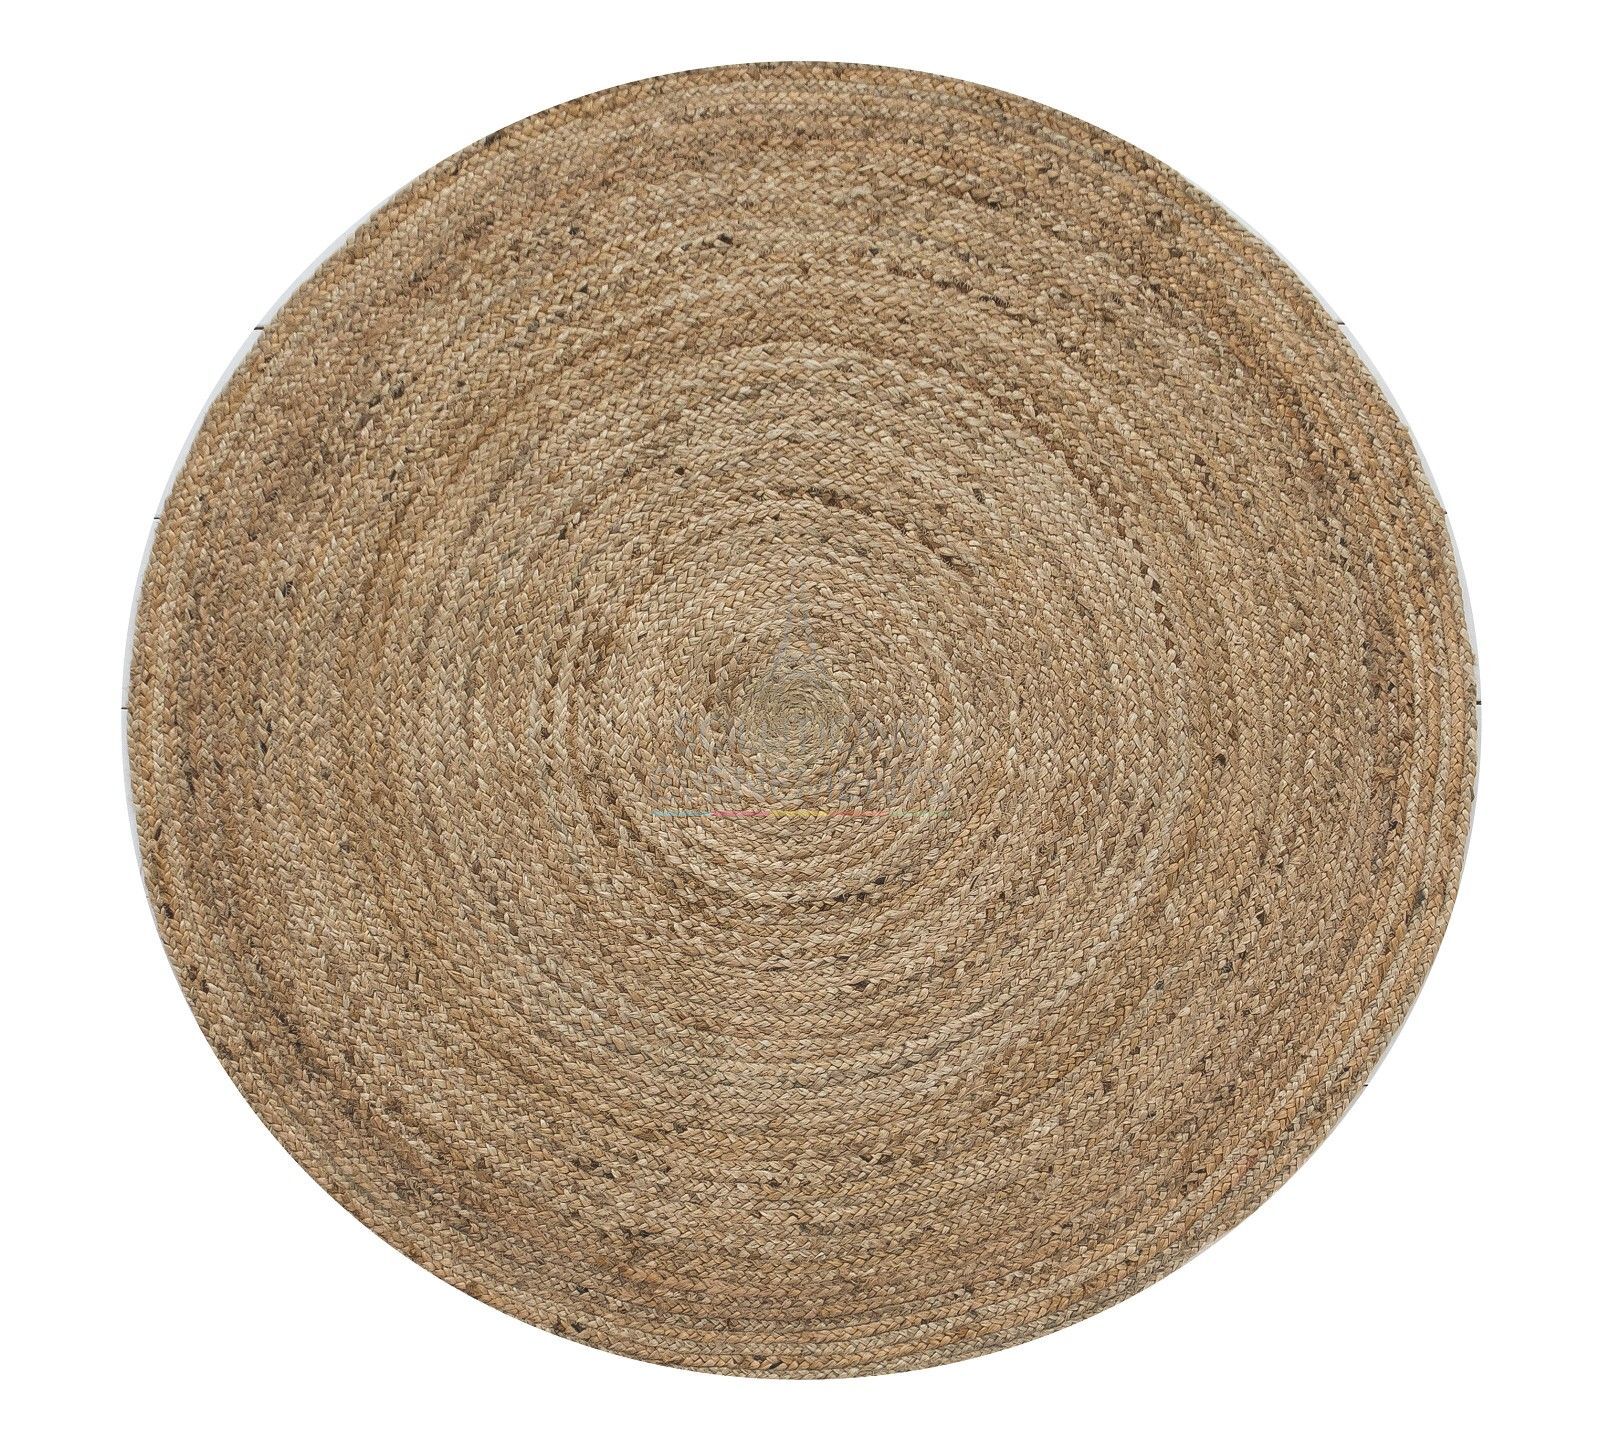 Rental round natural jute rug